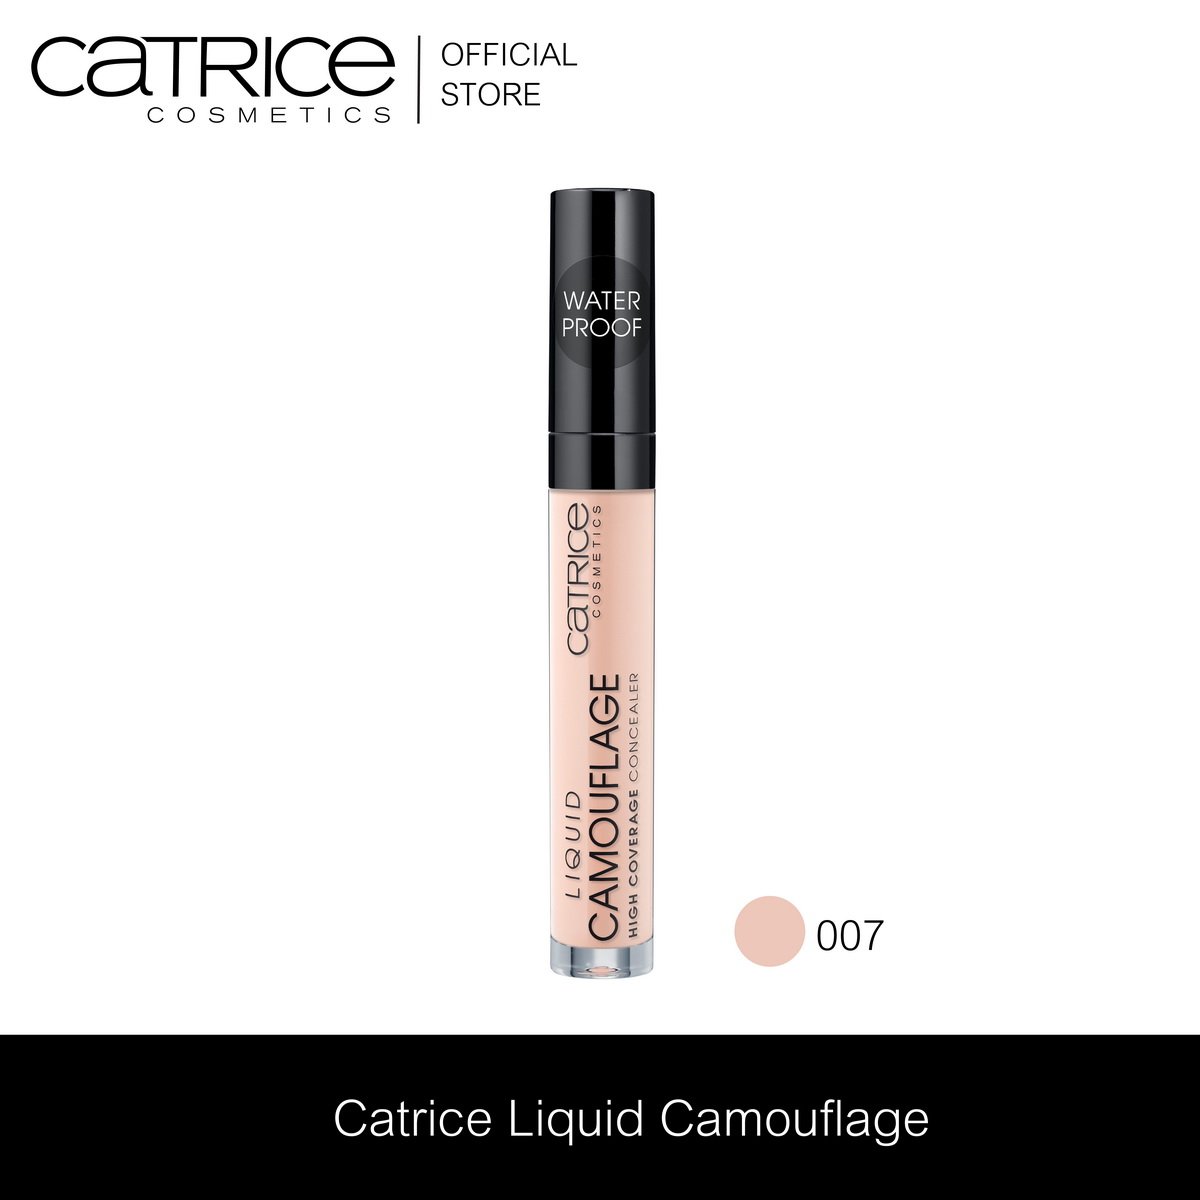 Catrice Liquid Camouflage High Coverage Concealer 007 - คาทริซลิควิดคามัวร์ฟลาจไฮคัพเวอร์ราจคอนซีลเลอร์007